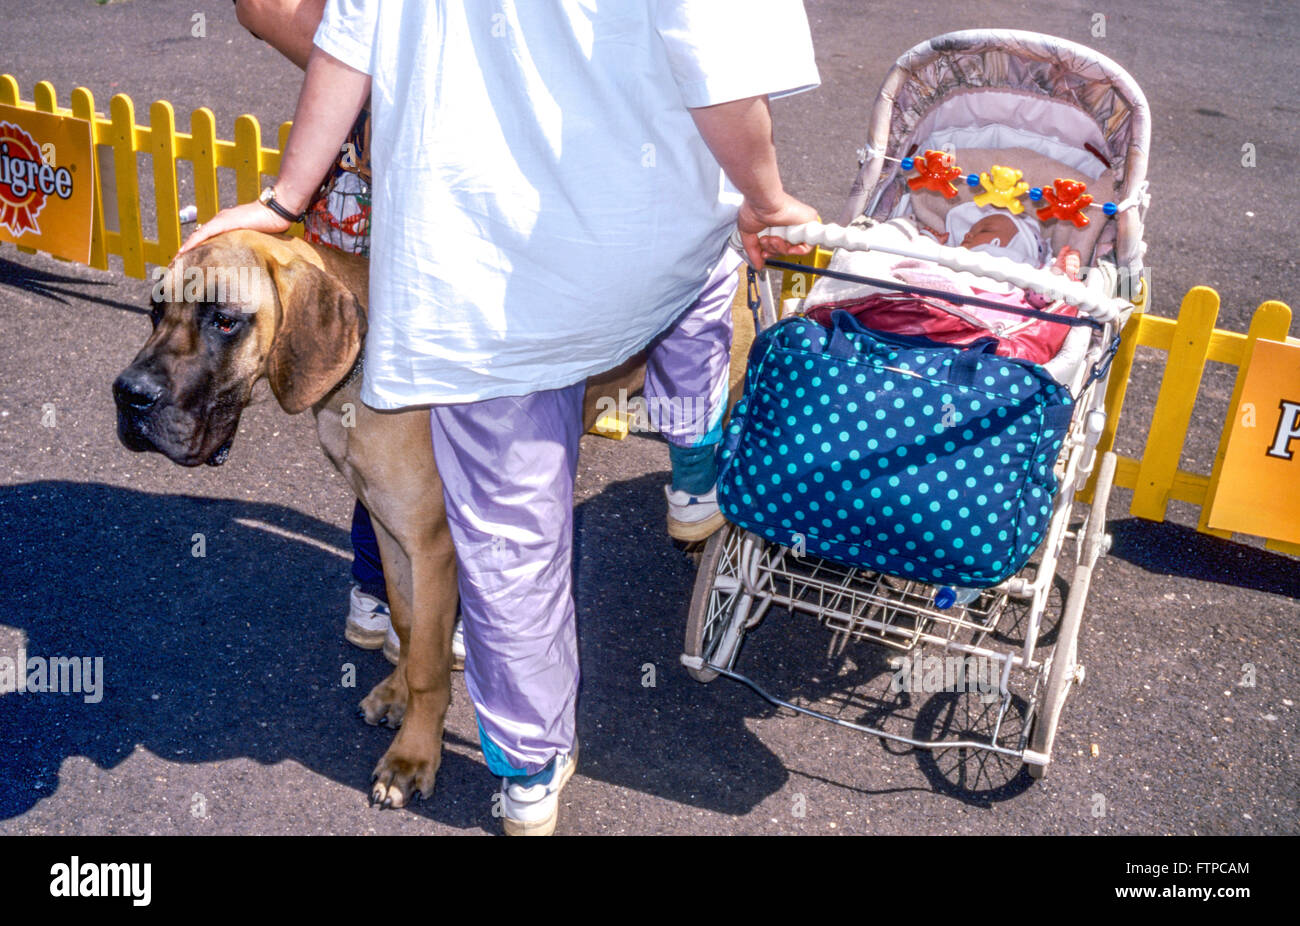 Dog and baby in pram, Babysitter, care Stock Photo